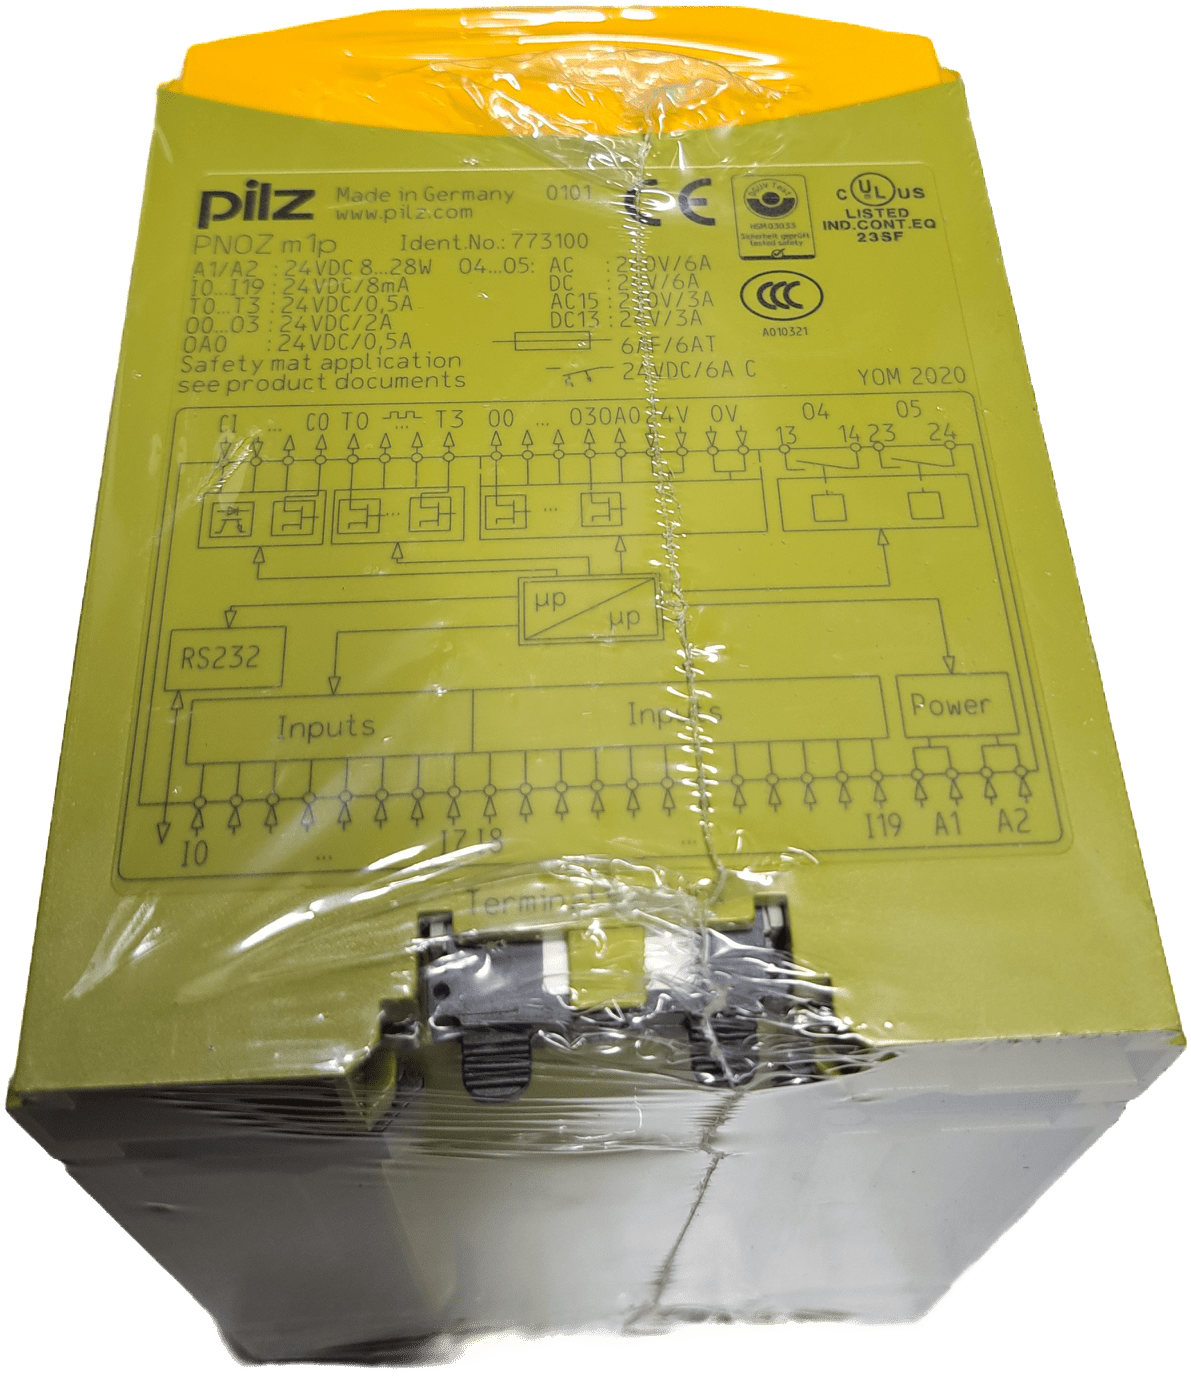 Pilz PNOZ m1p base unit 773100 (n) - #product_category# | Klenk Maschinenhandel